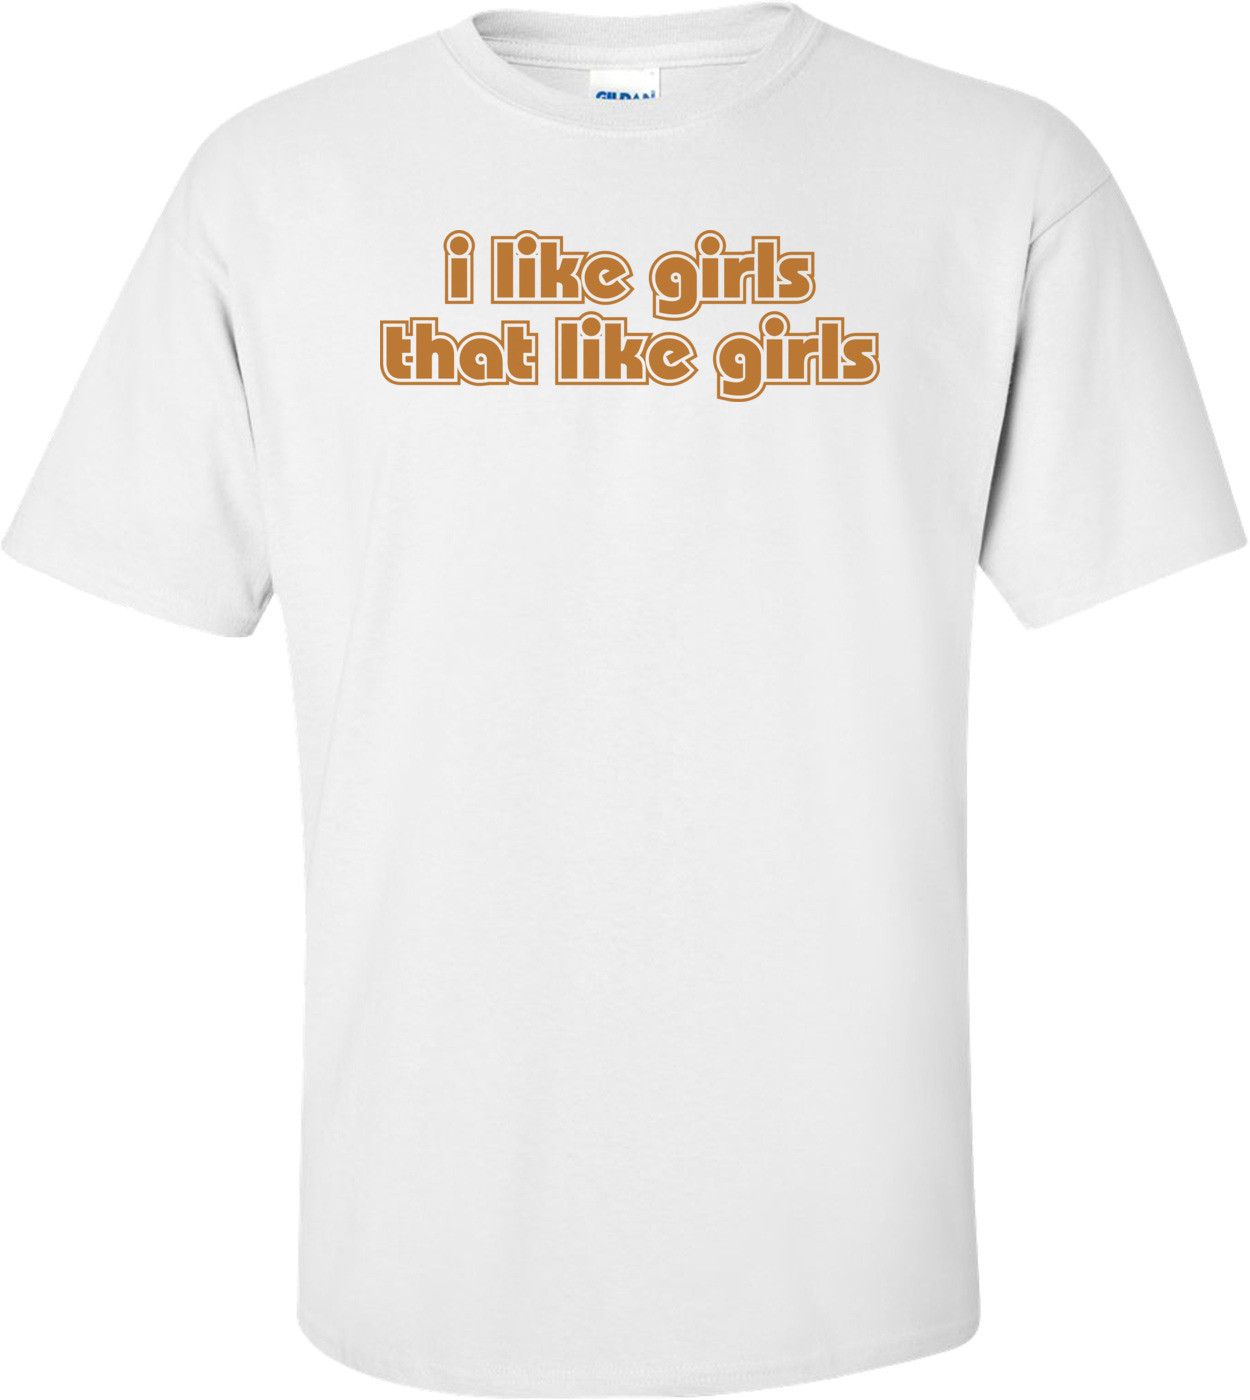 I Like Girls That Like Girls T-shirt